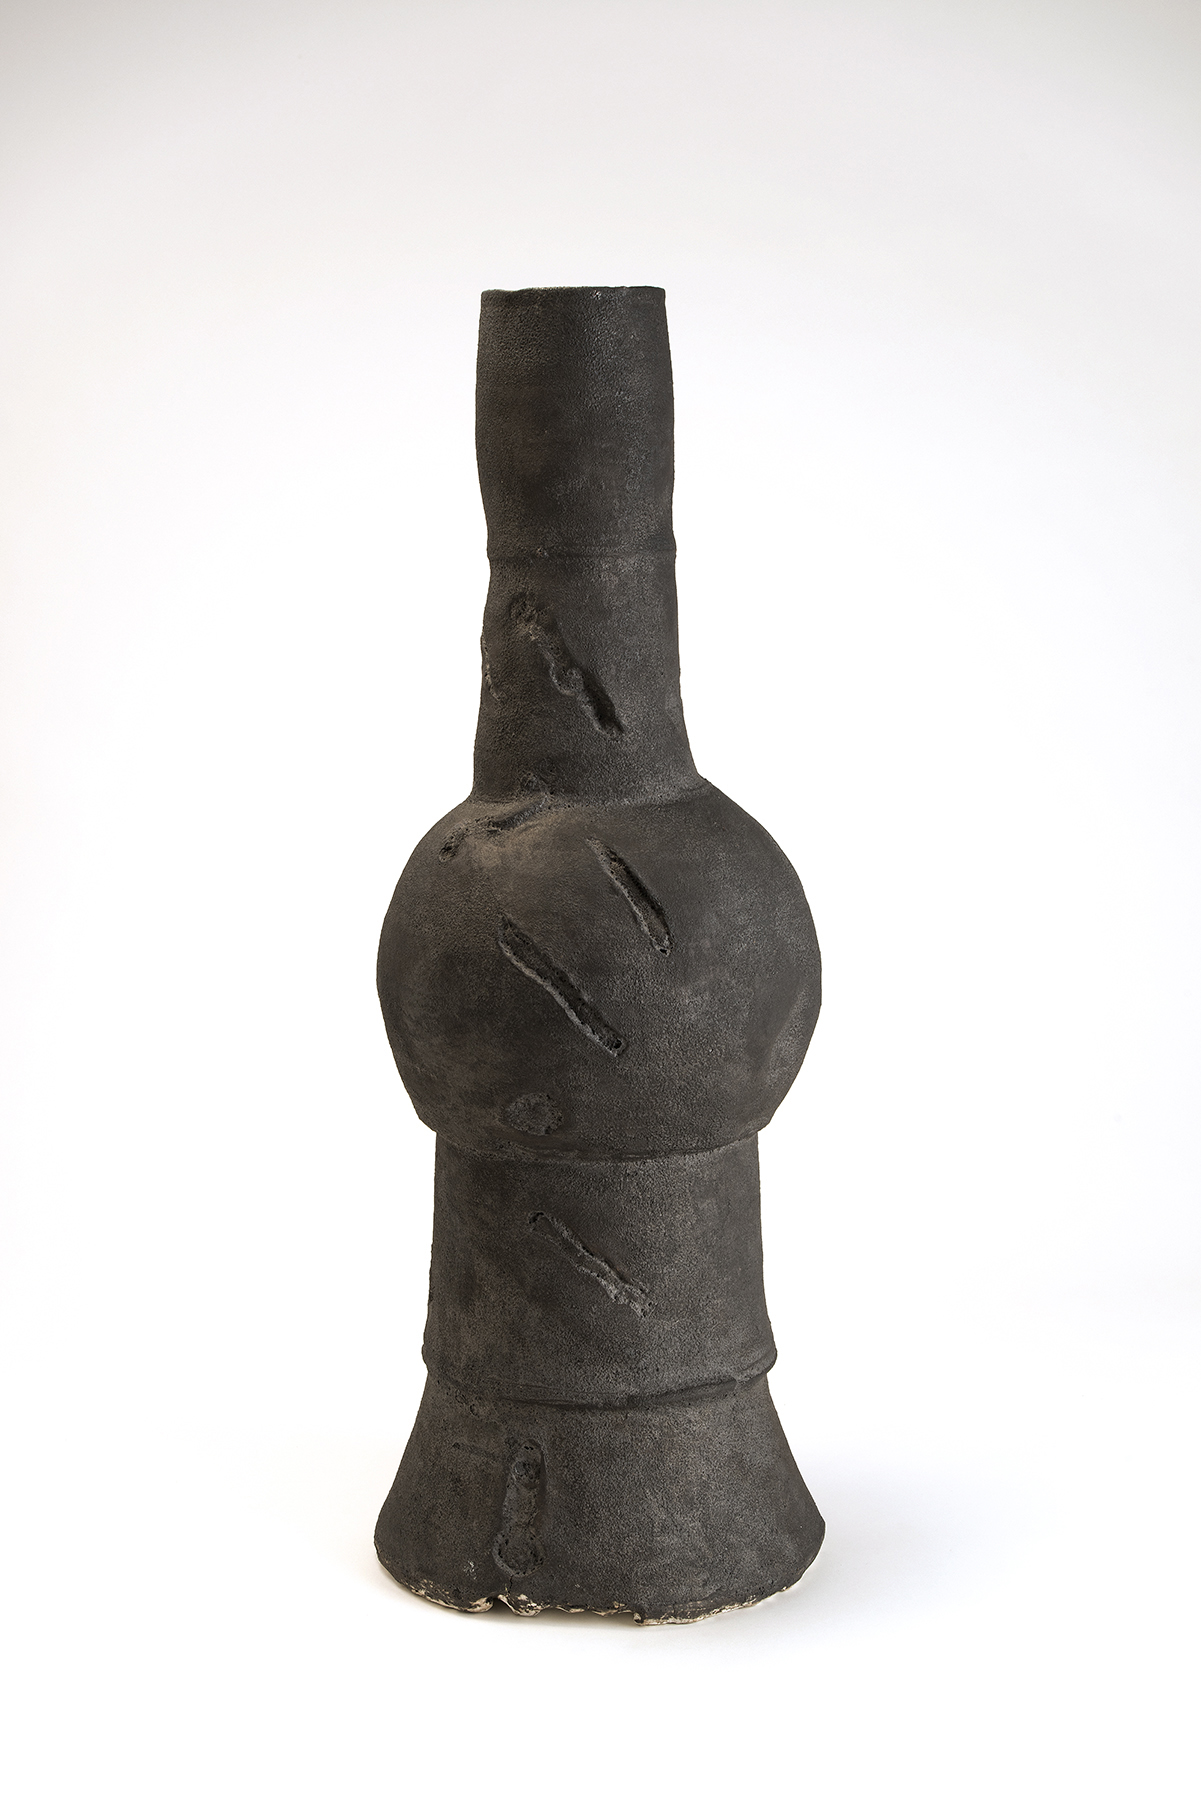 Peter Voulkos, "Ceramic Pot (Steel Pot)," 1968. Stoneware (thrown & shaped). Photo by Craig Smith, courtesy Arizona State University Art Museum.